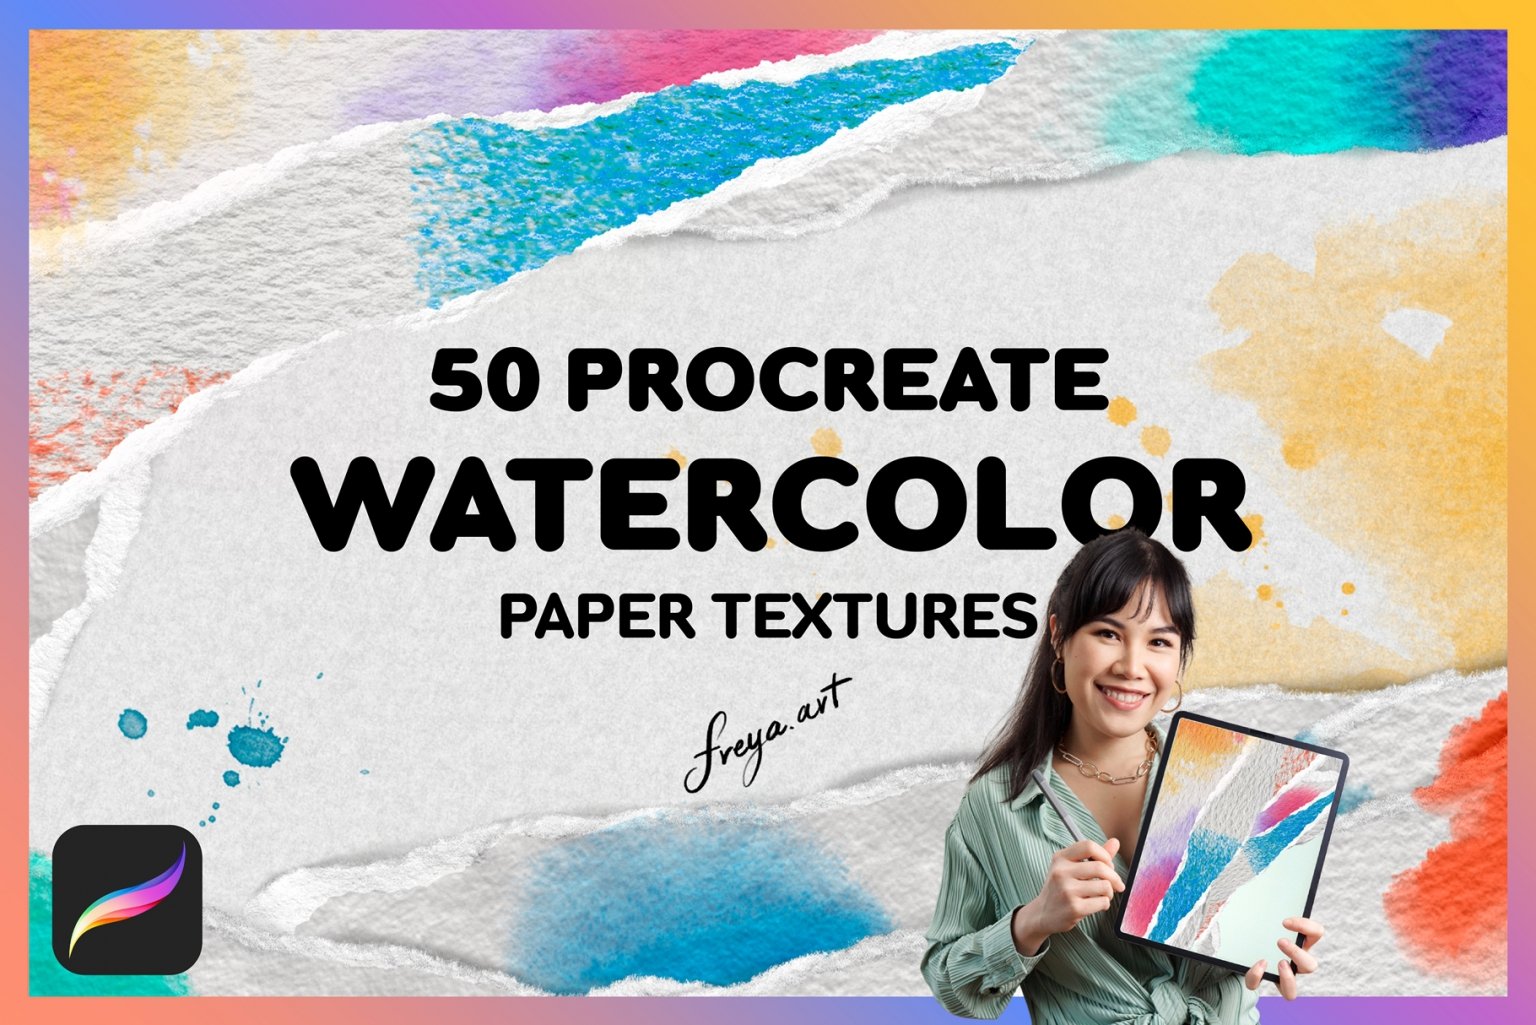 50 unique paper watercolor texture brushes for Procreate